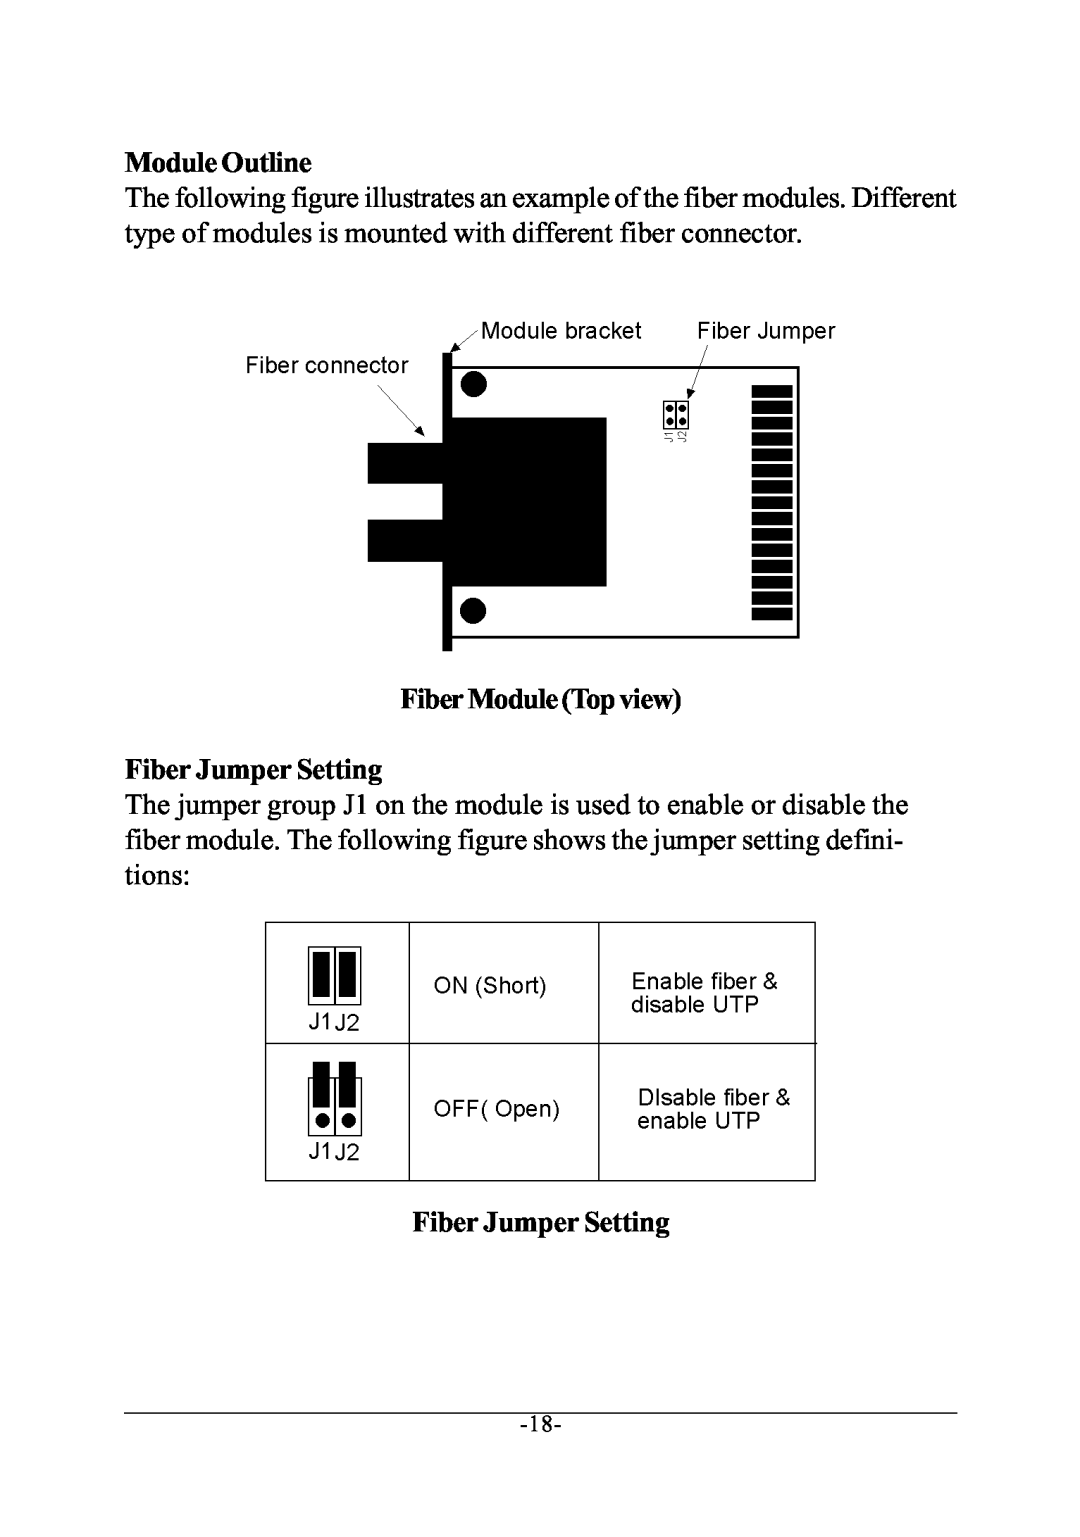 KTI Networks KS-801 manual Module Outline, Fiber Module Top view Fiber Jumper Setting 